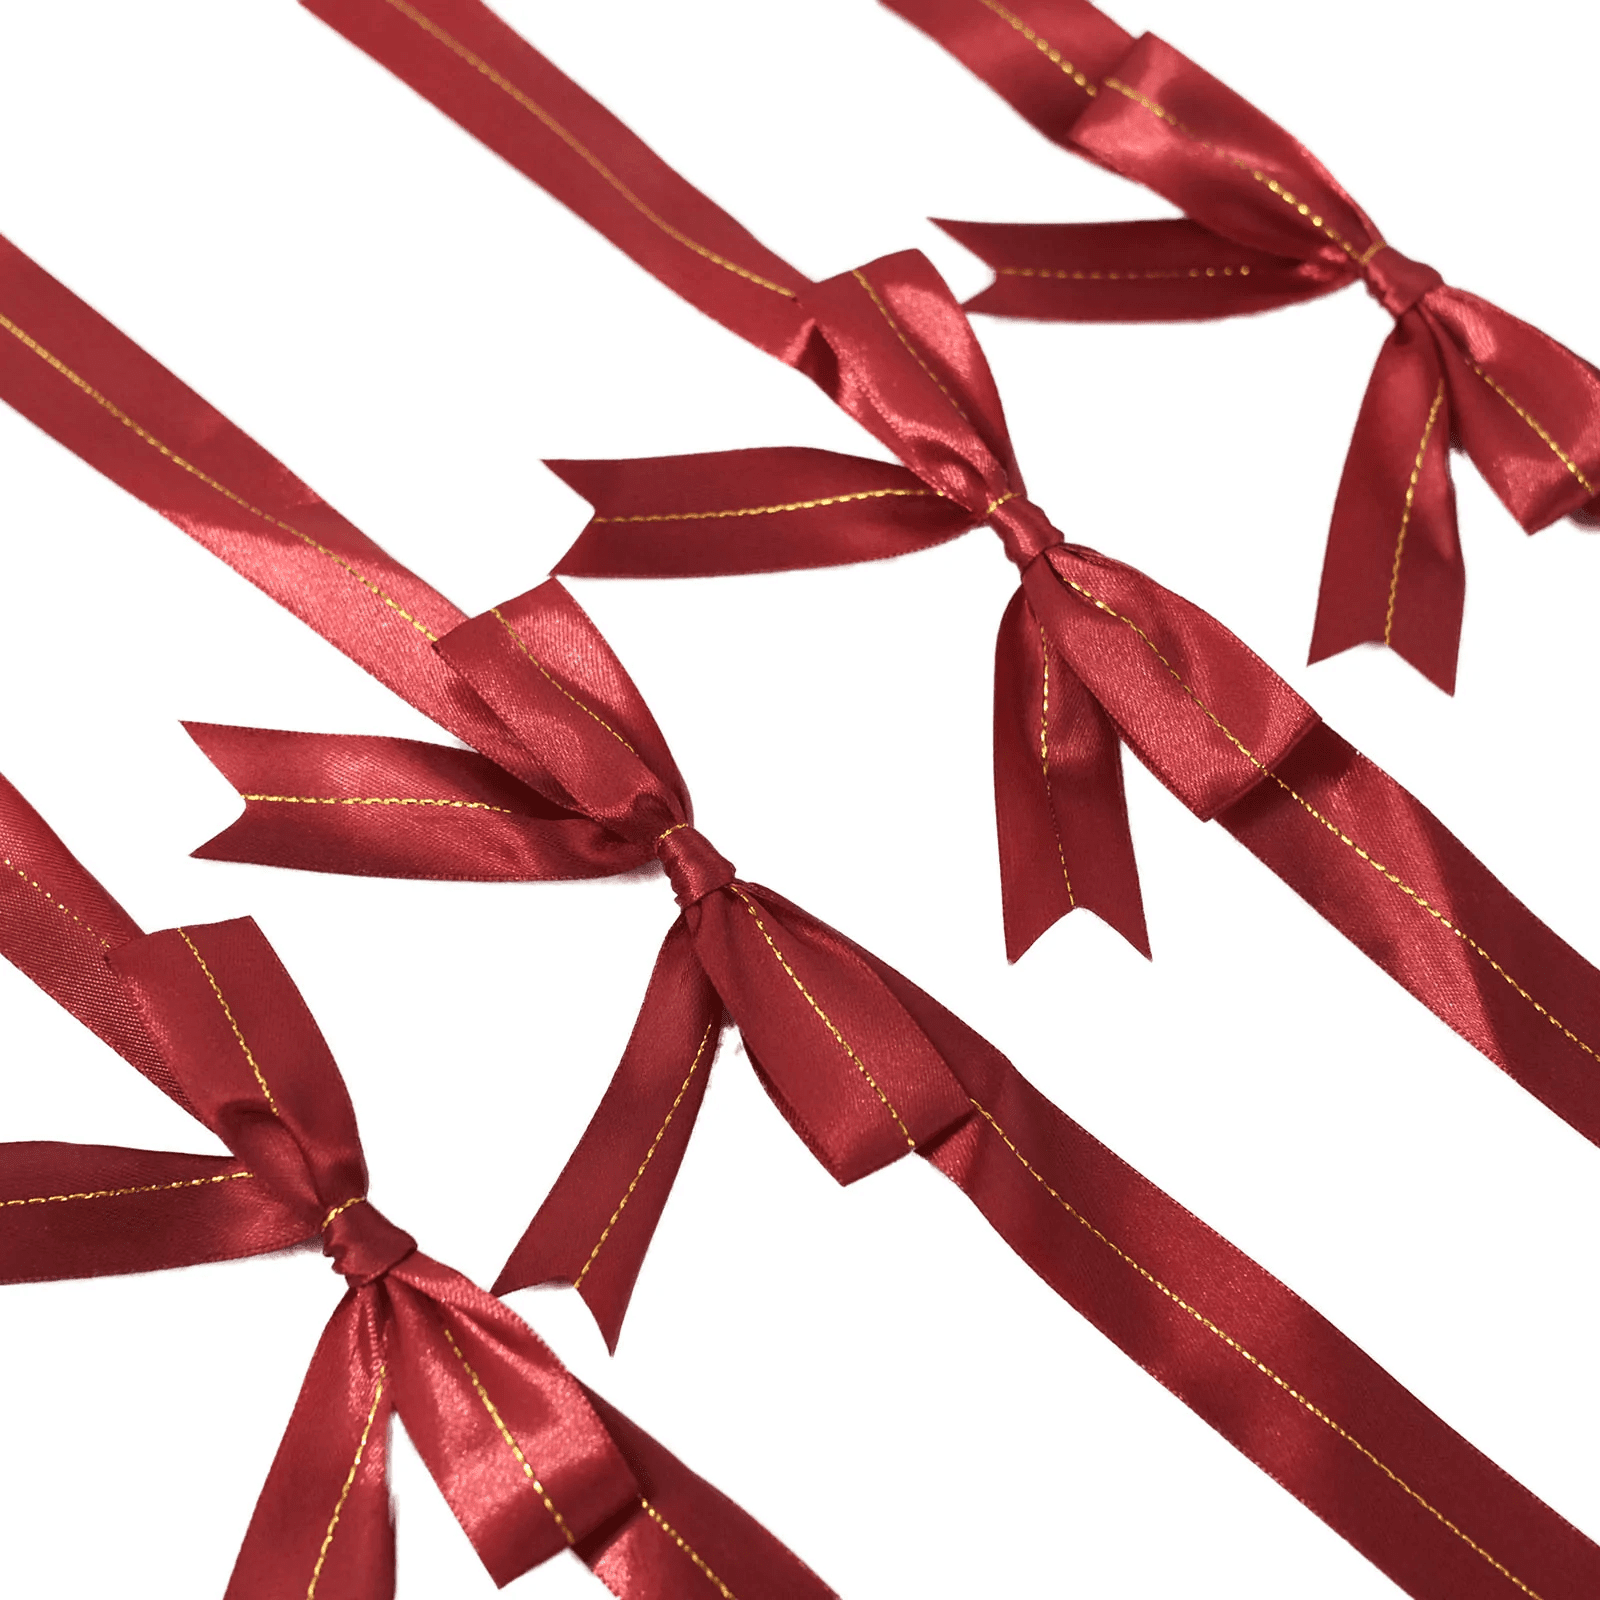 Atom Atomic Satin Ribbon for Bows Gift Wrapping - 1 - 3 Yards